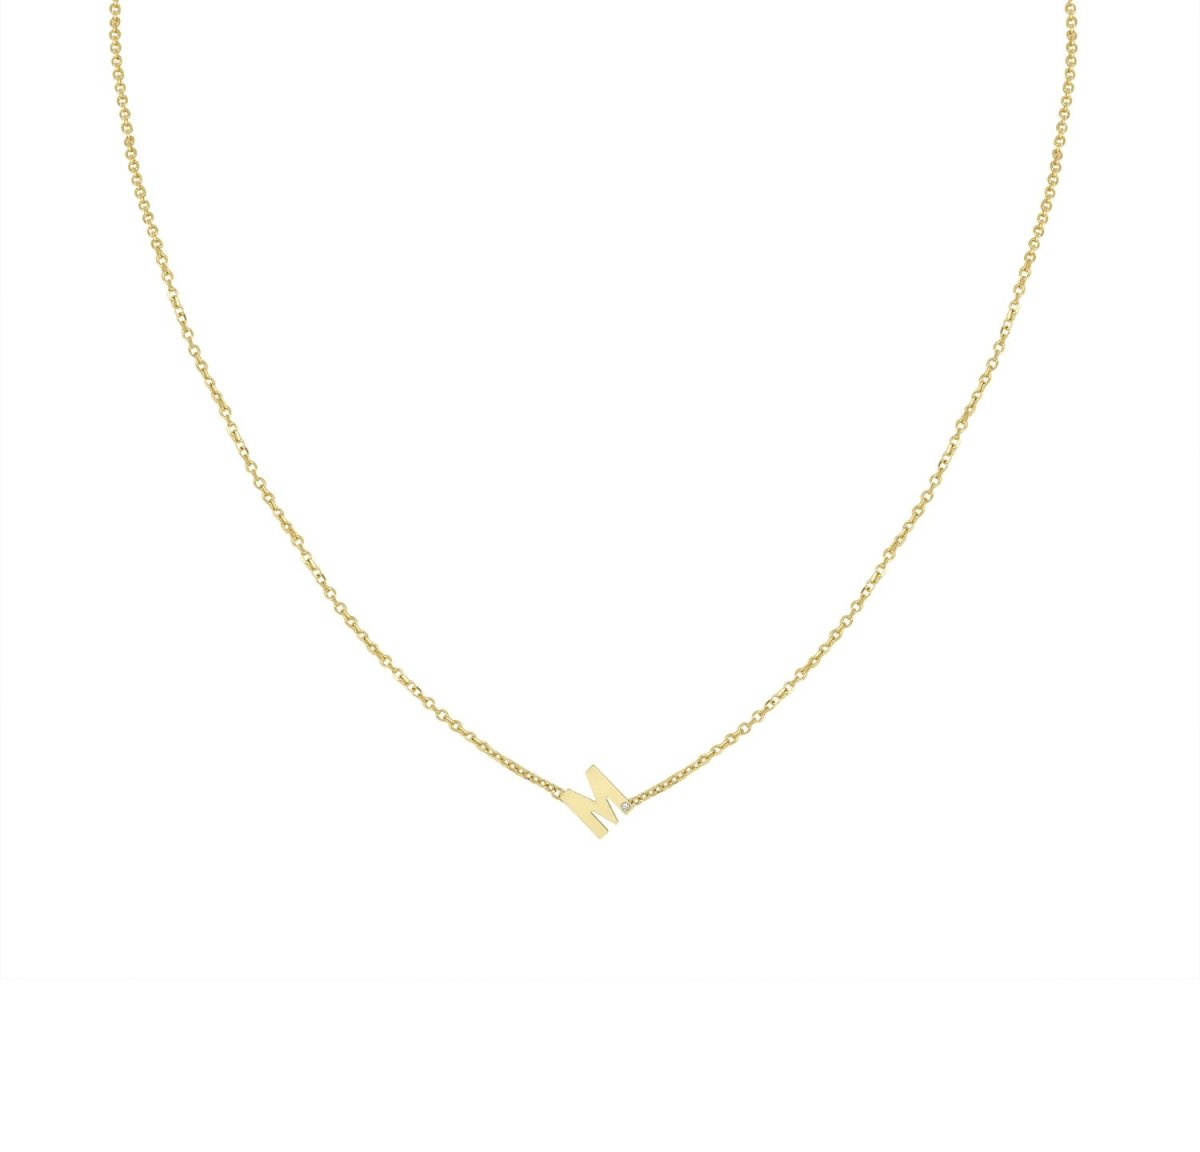 Letter L Pendant Necklace in Gold | Kendra Scott